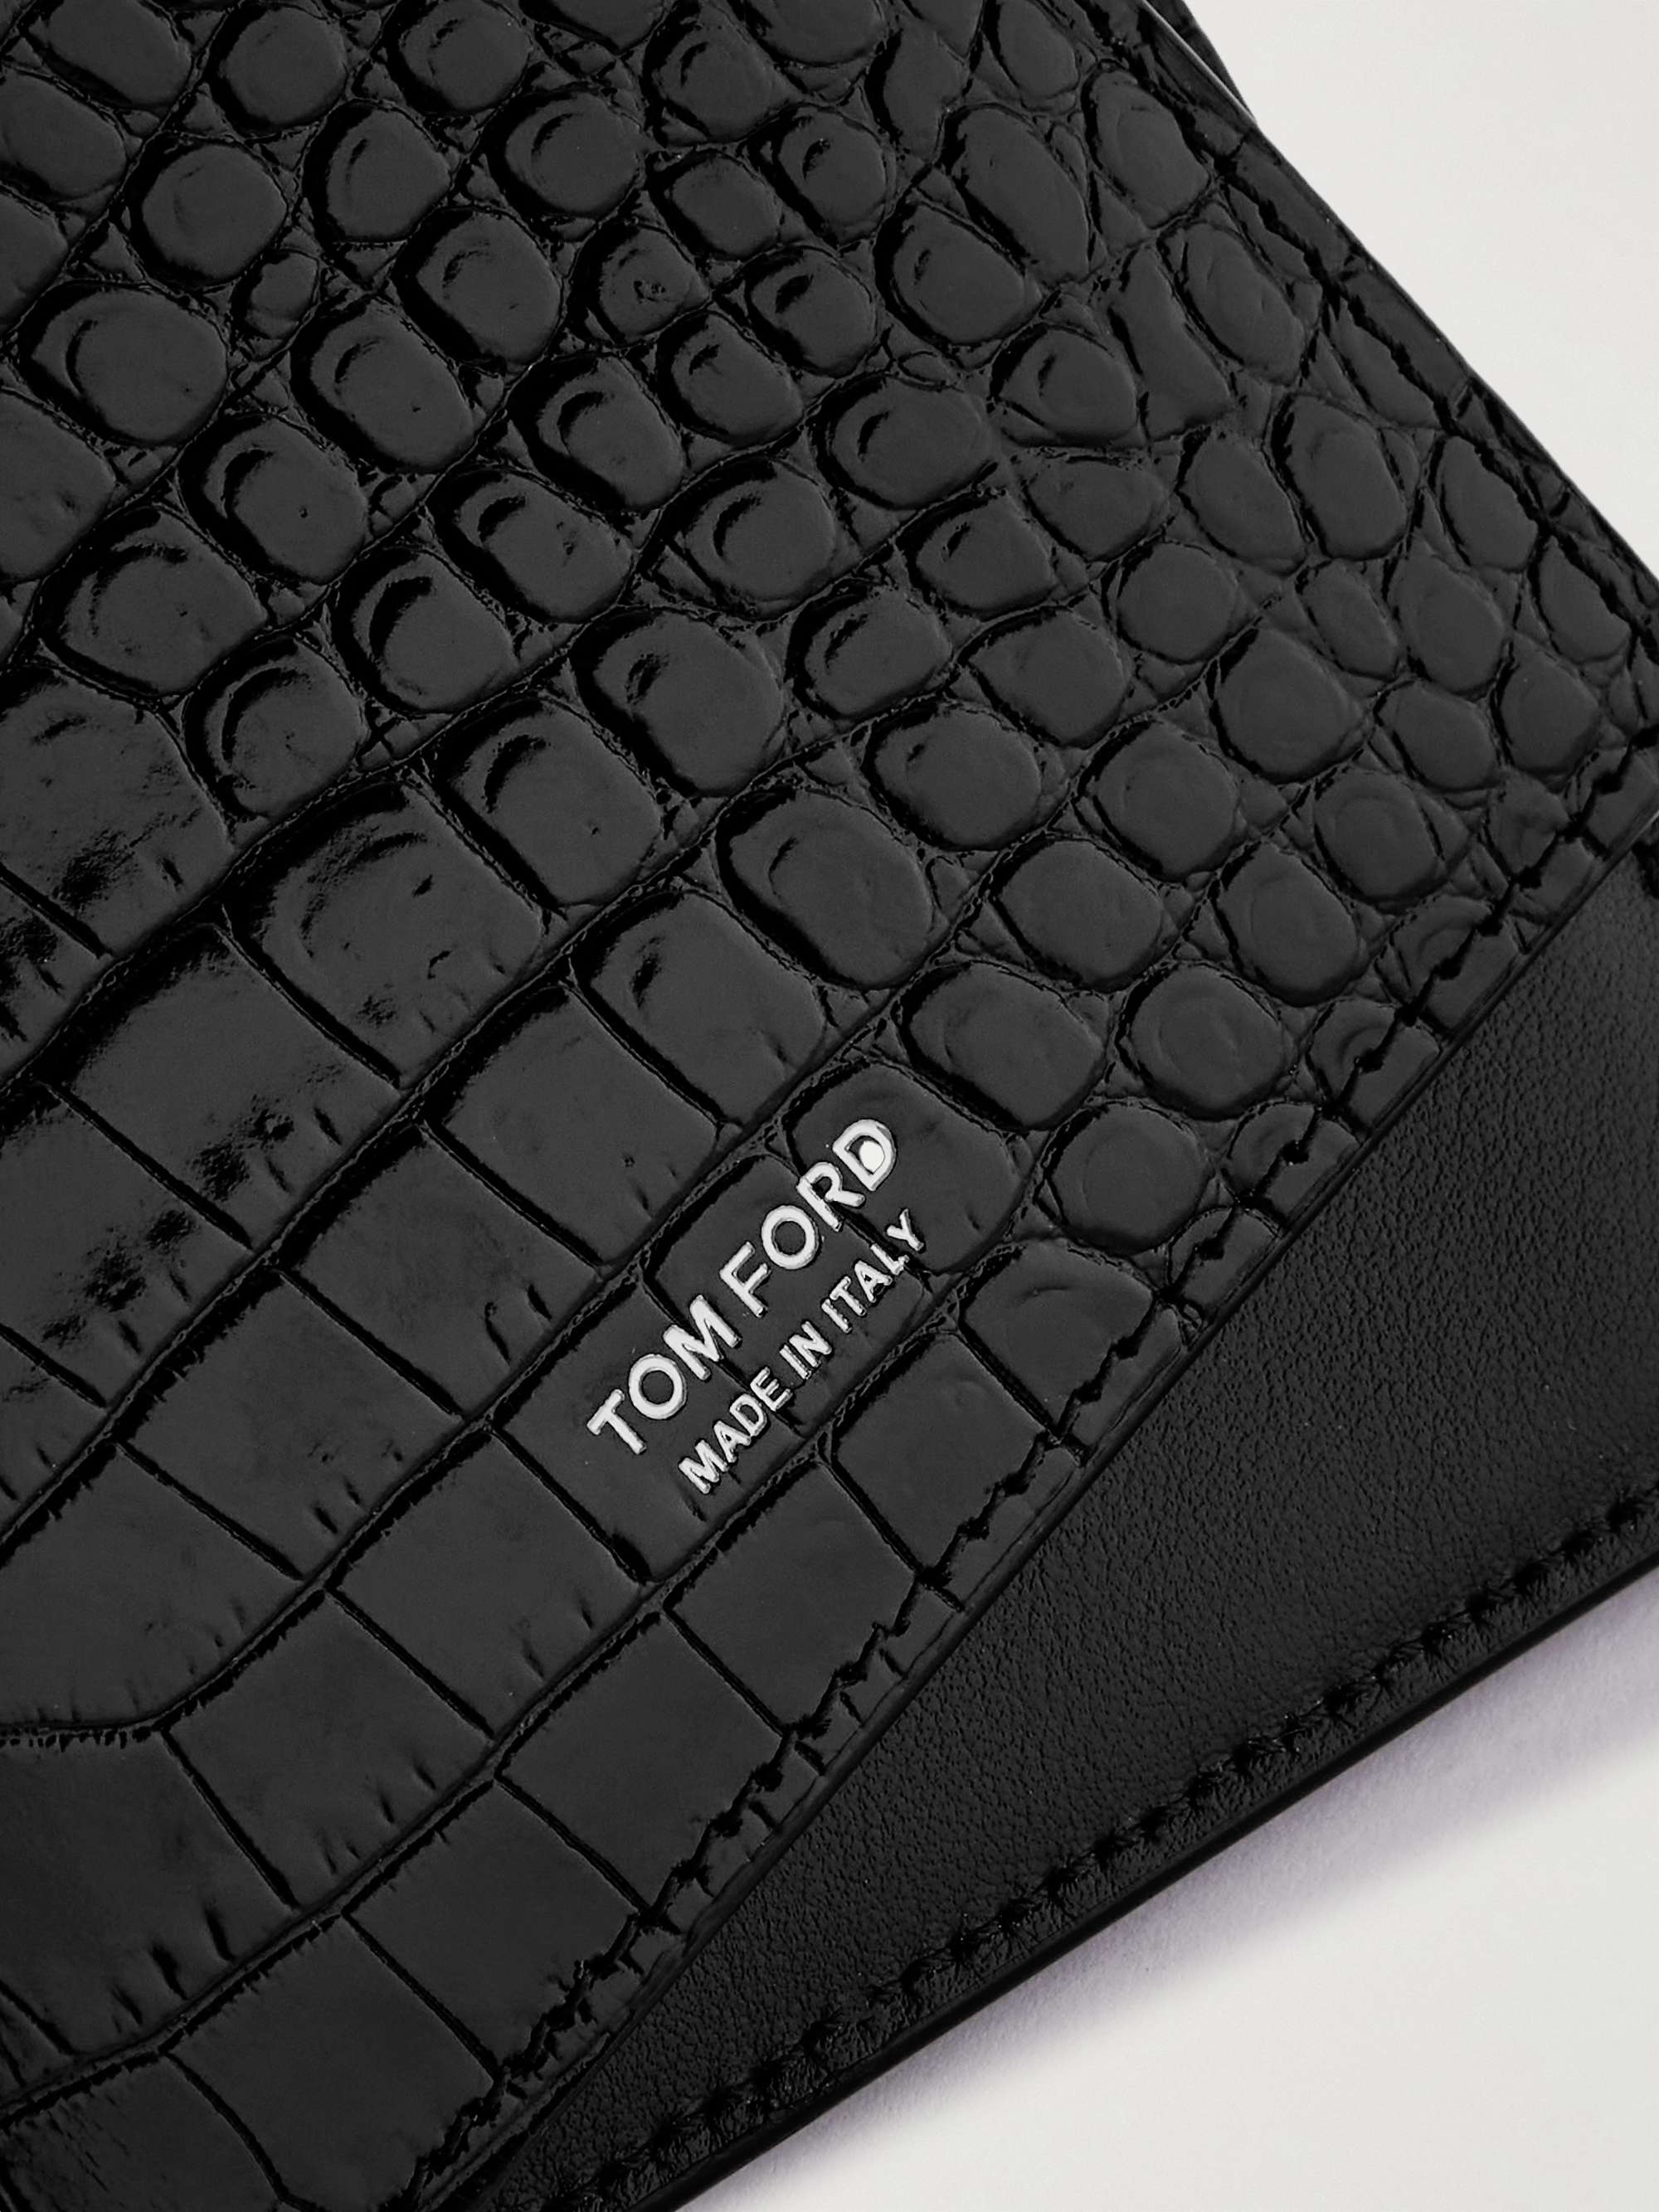 TOM FORD Croc-Effect Leather Billfold Wallet